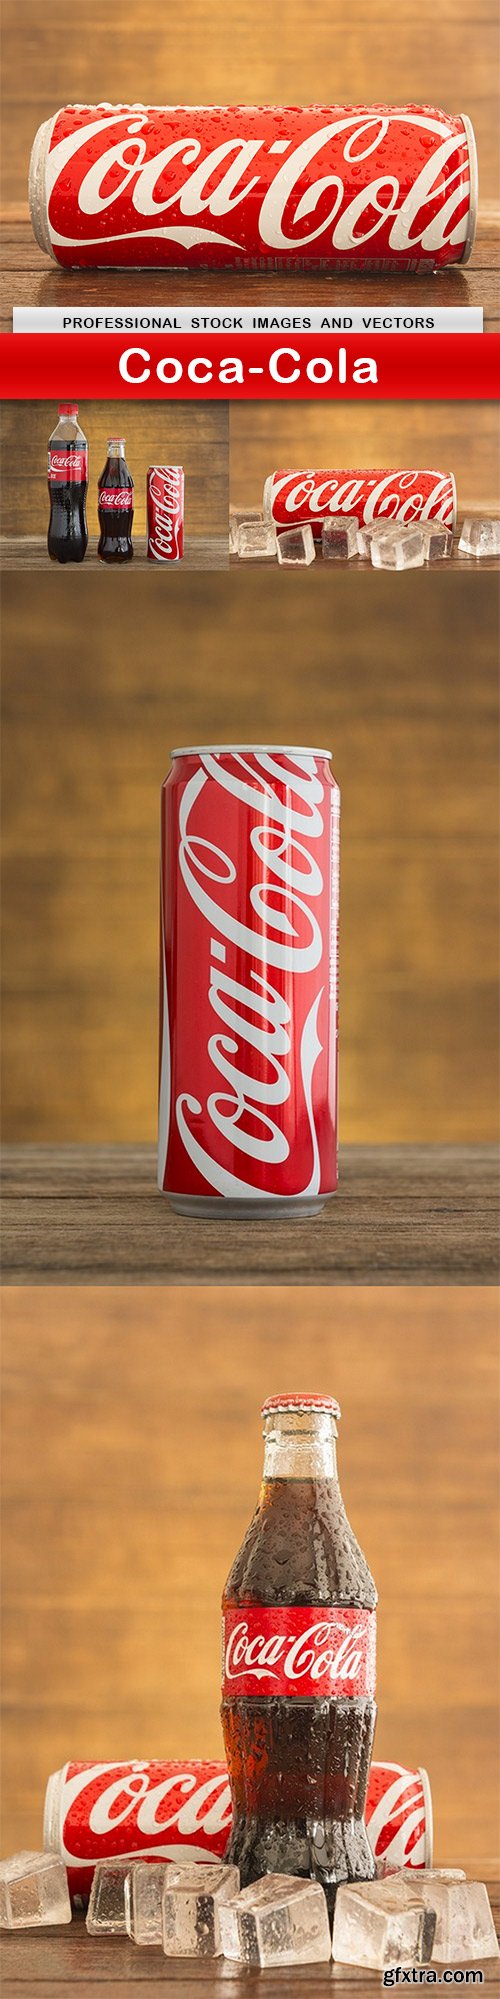 Coca-Cola - 5 UHQ JPEG